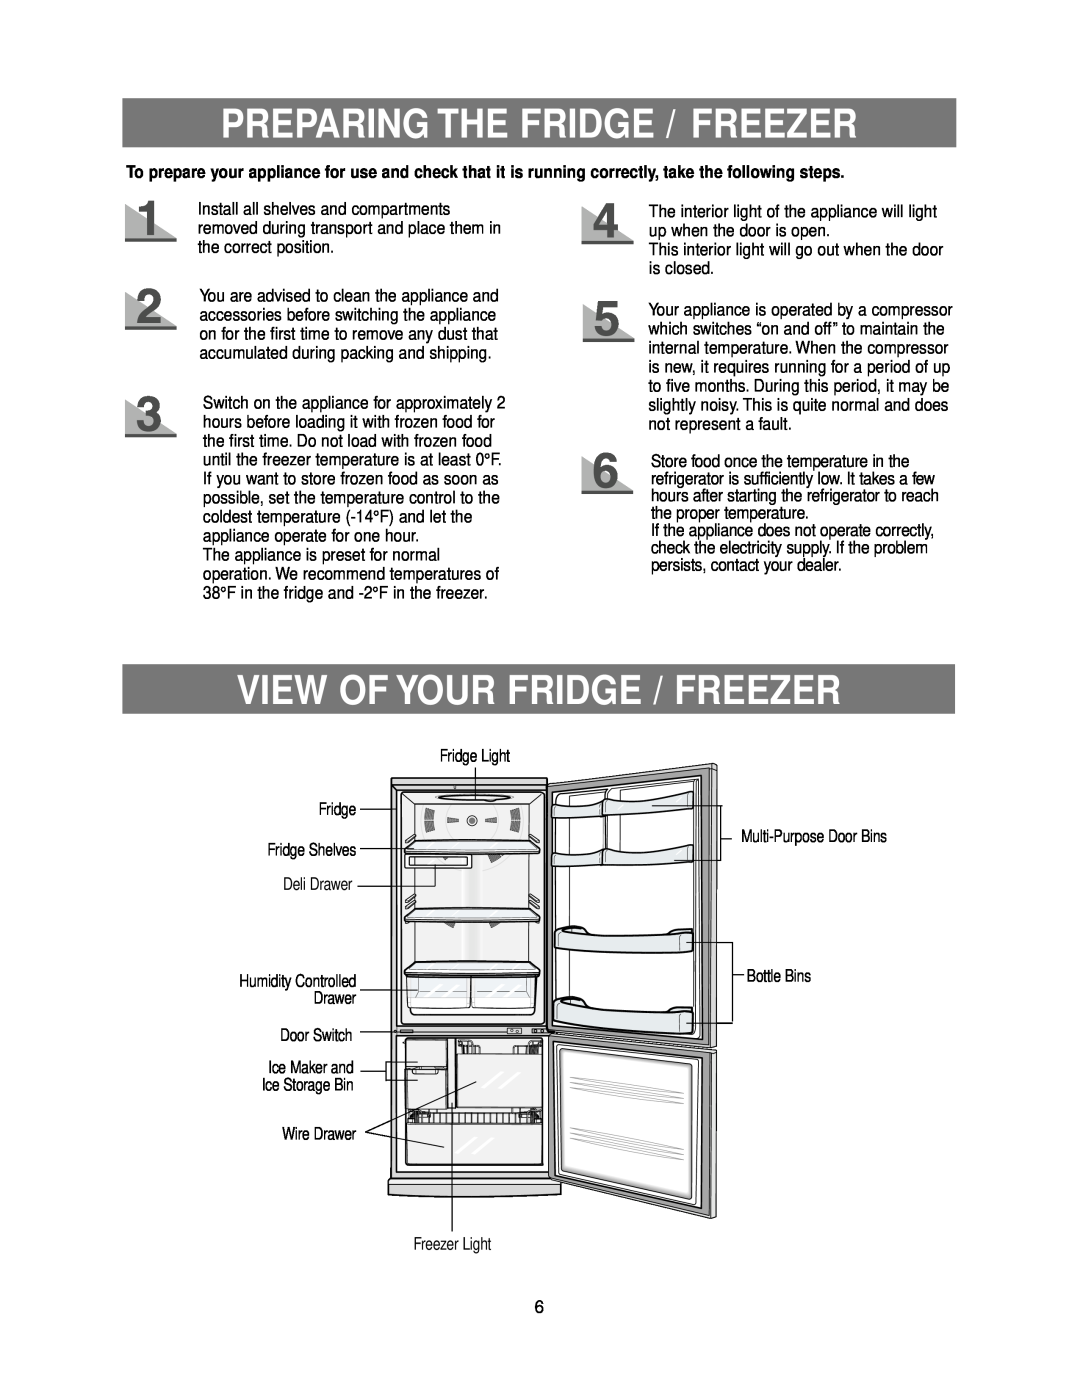 Samsung RB215ZA** Preparing The Fridge / Freezer, View Of Your Fridge / Freezer, Drawer Door Switch, Wire Drawer 